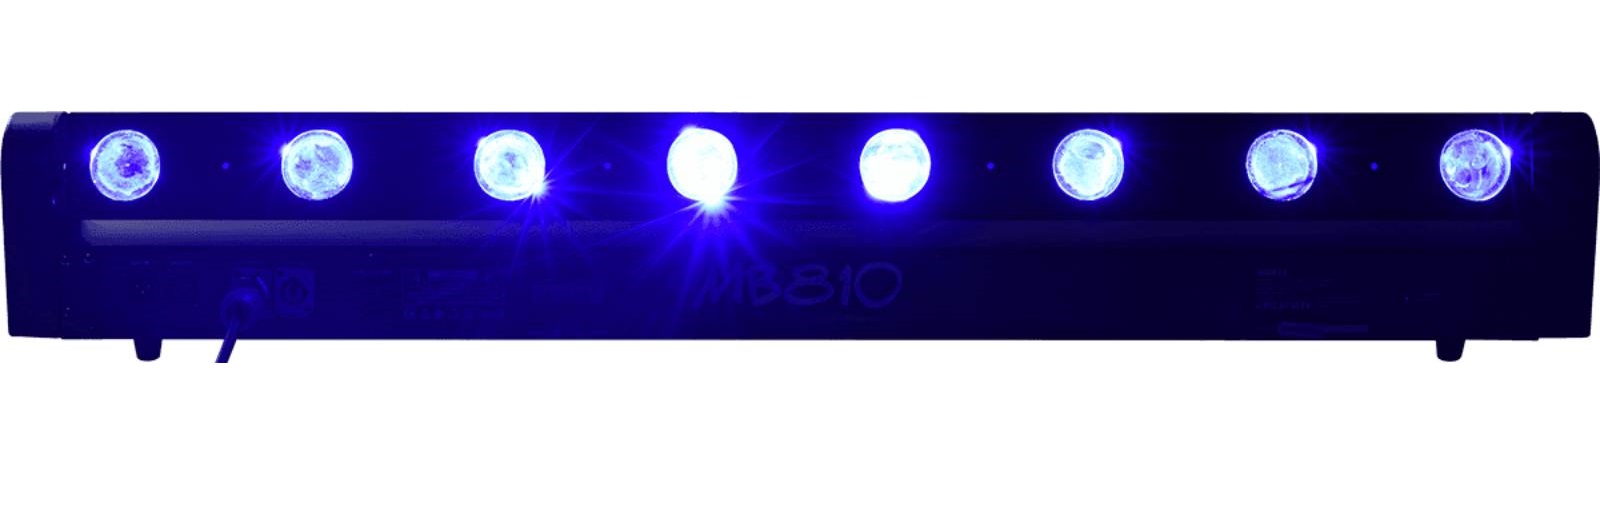 ALGAM LIGHTING MB 810 - 8 RGBW MOTORIZED LED BAR